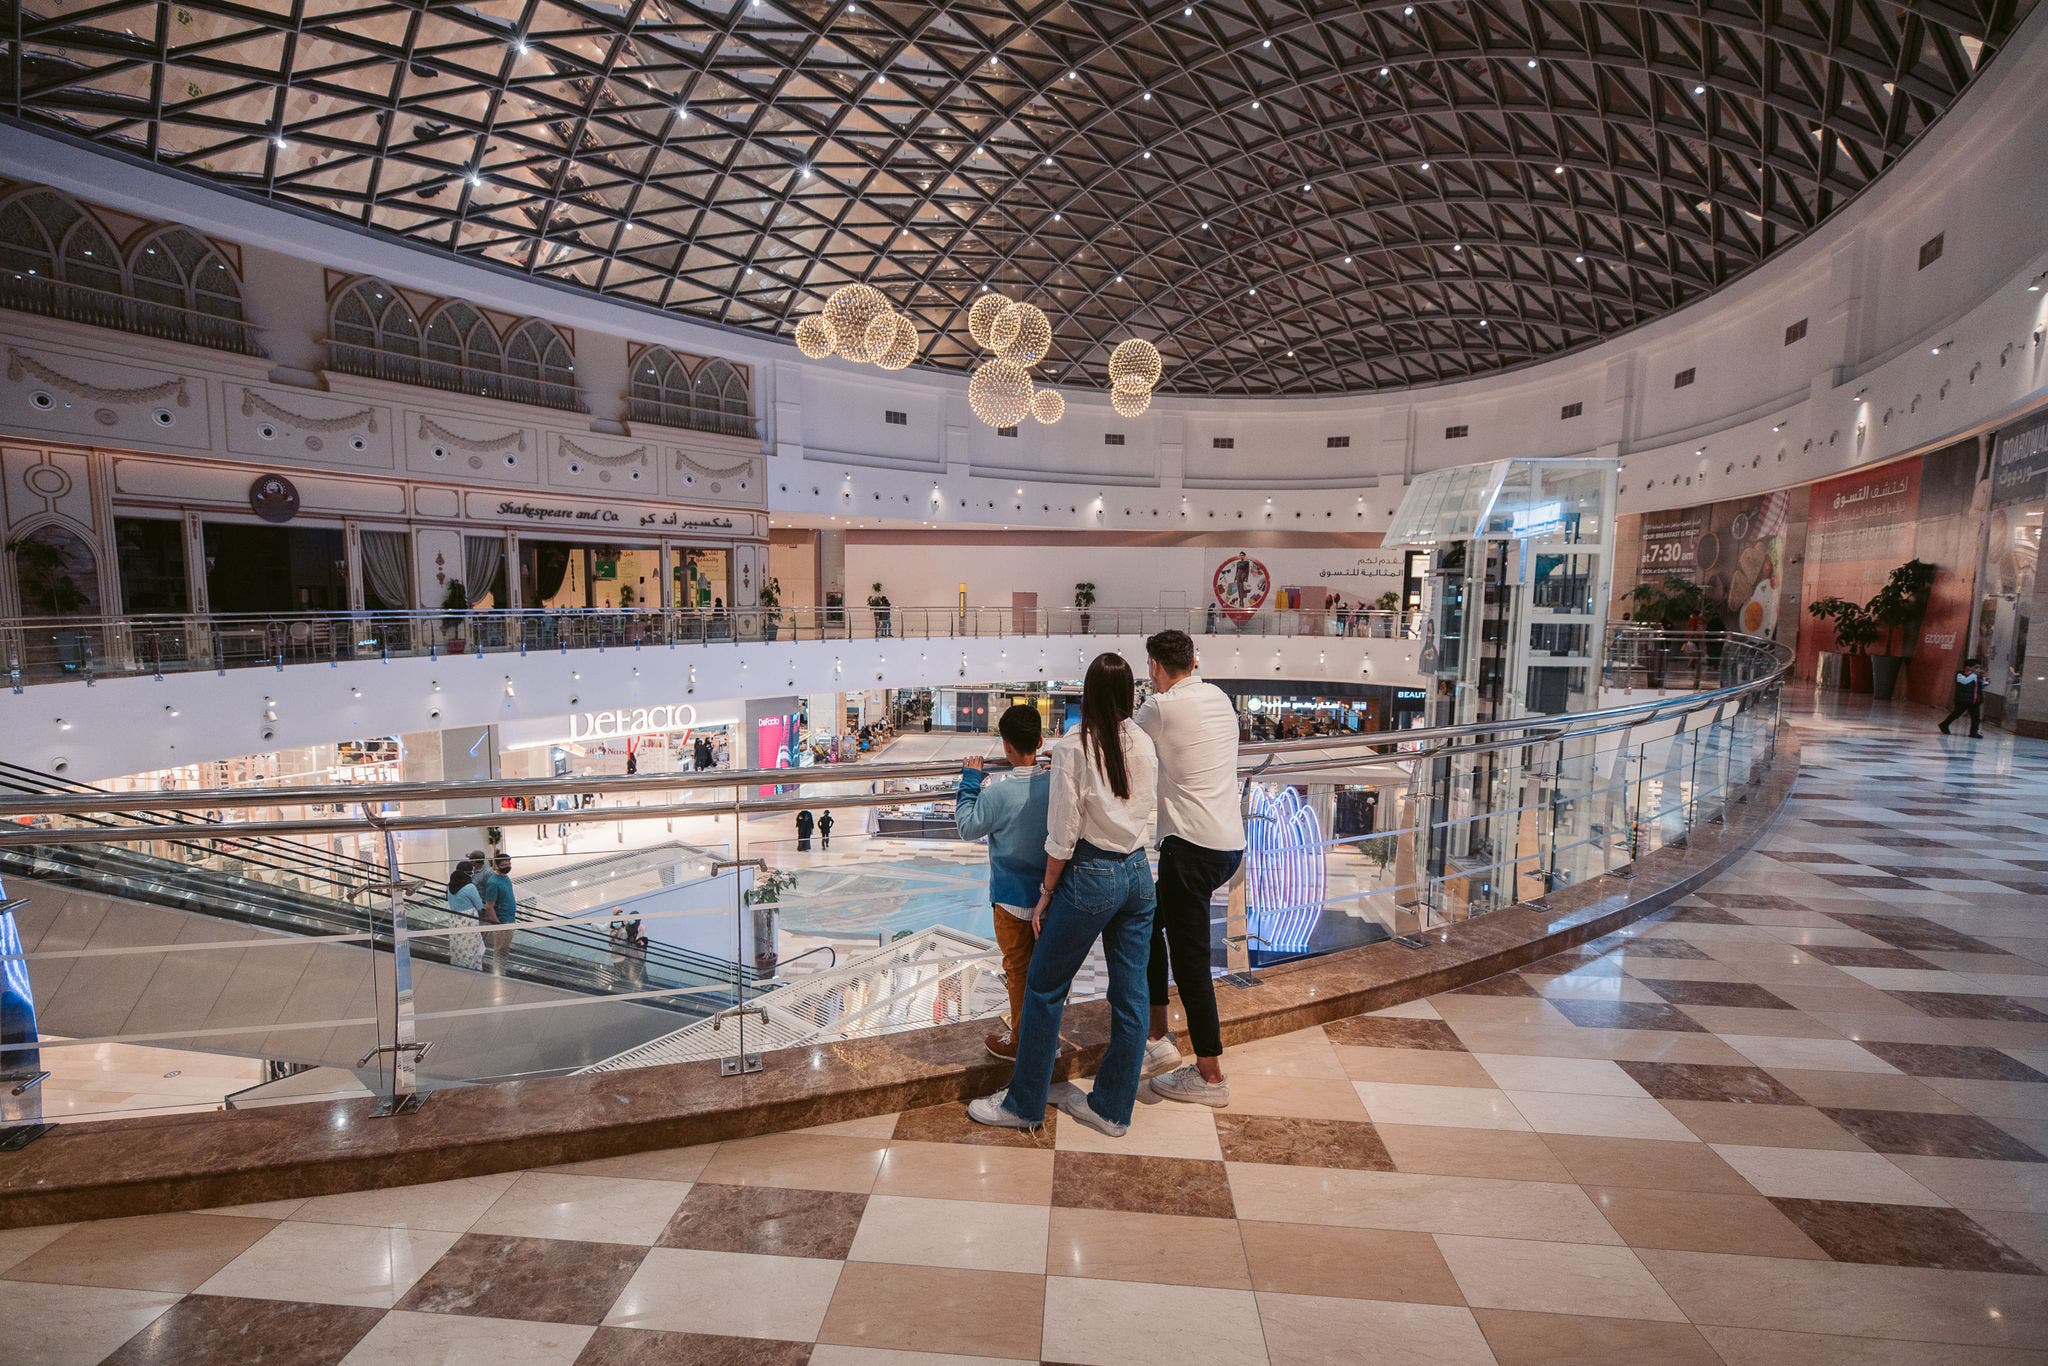 Ezdan Mall